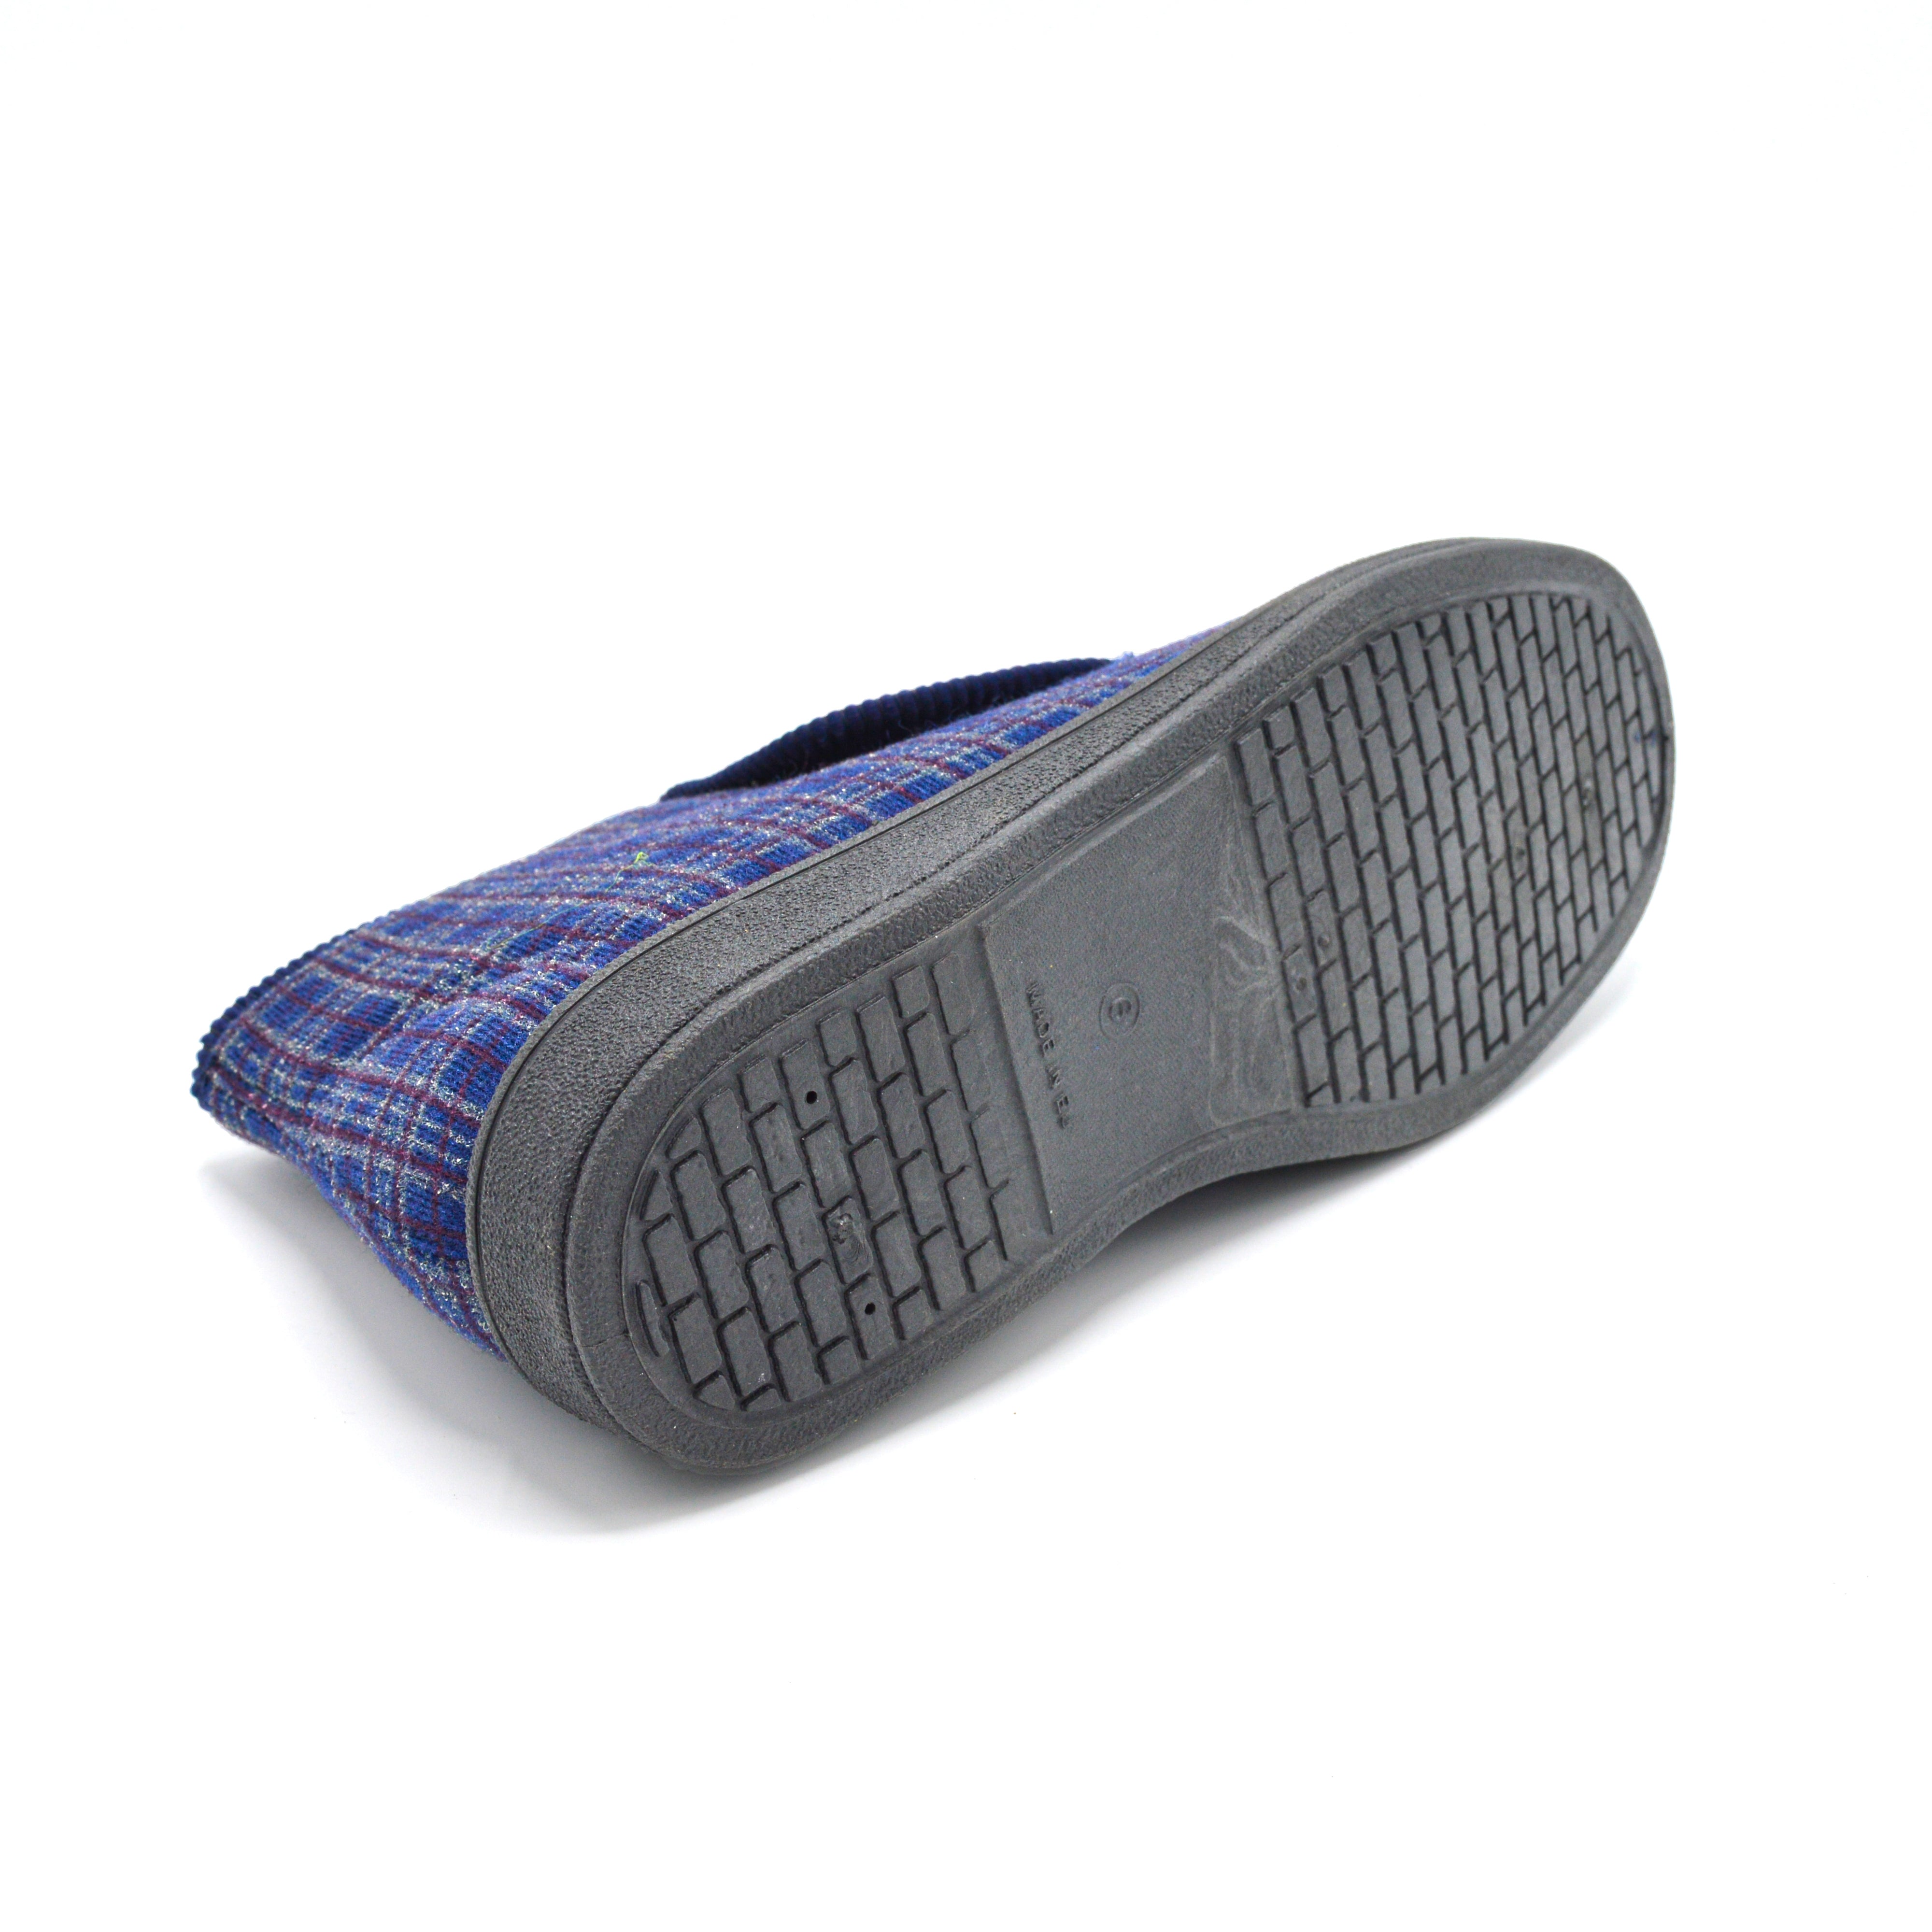 Warm Velcro Boot Slippers for Swollen Feet